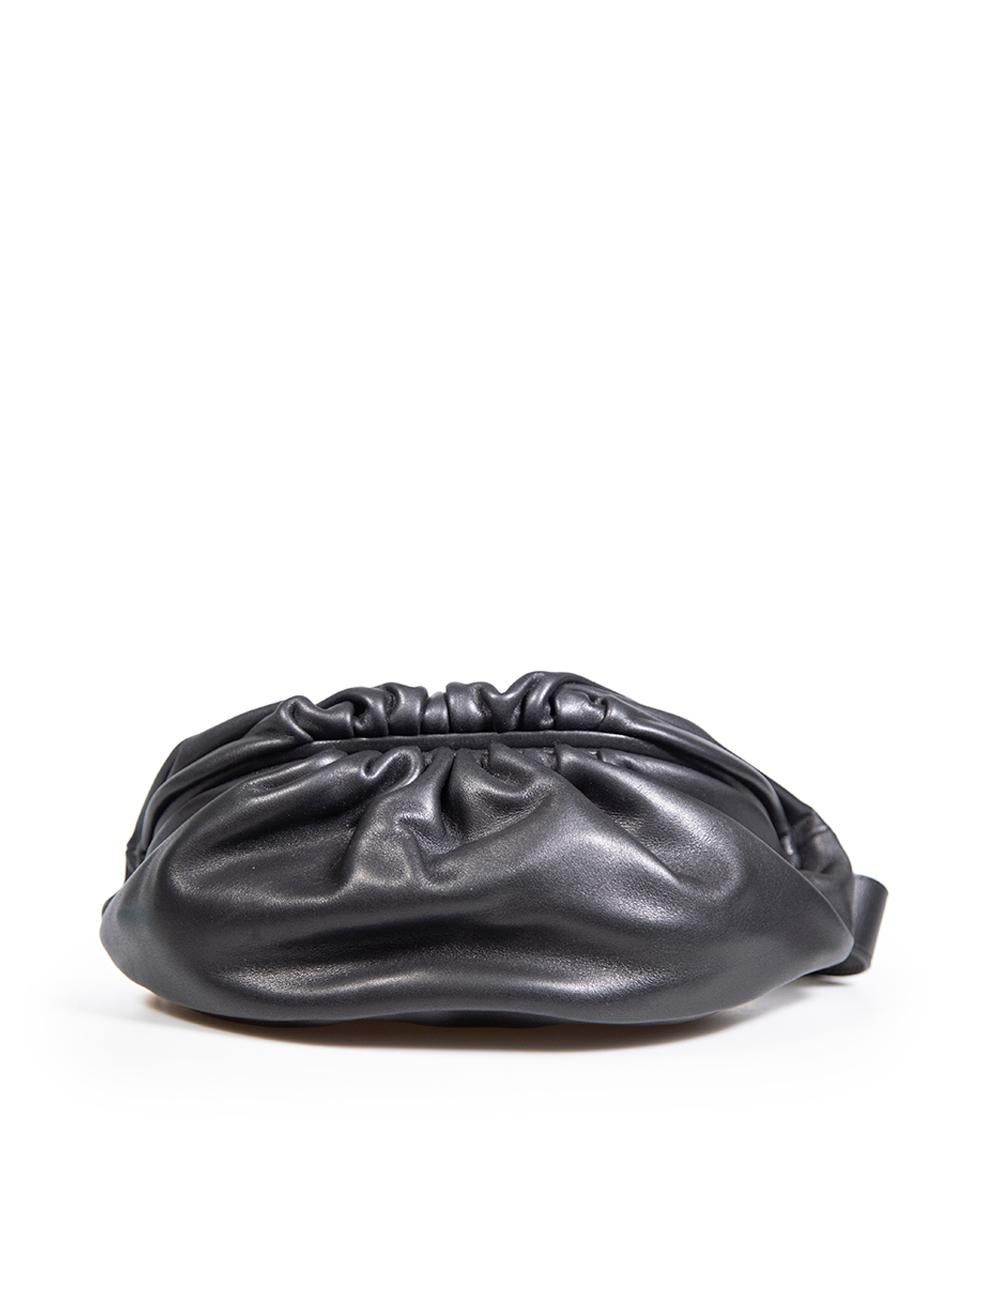 Bottega Veneta Black Leather Crossbody Chain Pouch Bag For Sale 1